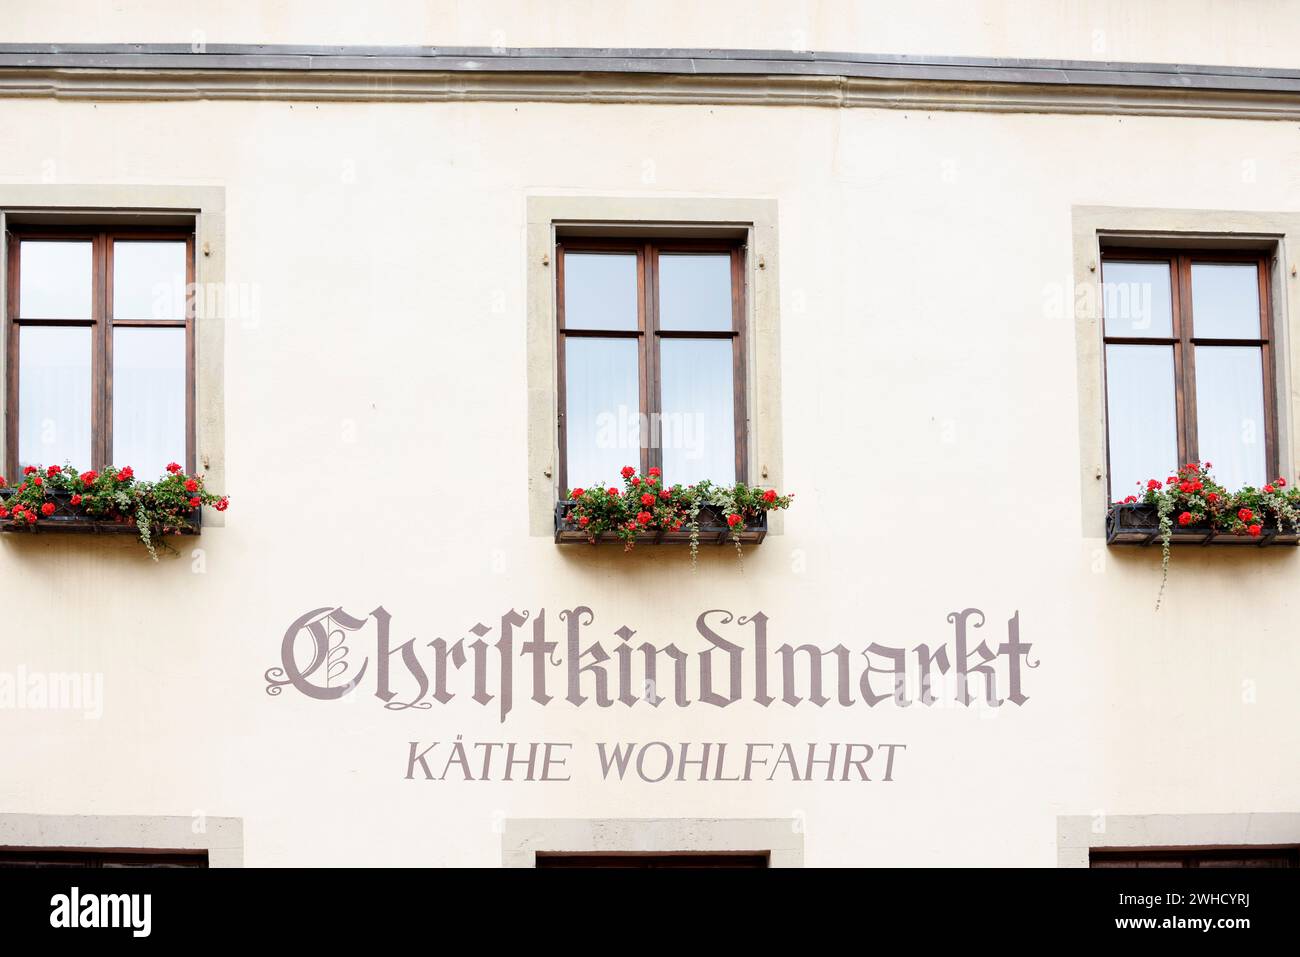 Käthe Wohlfahrt Christkindlmarkt store, Rothenburg ob der Tauber, moyenne Franconie, Bavière, Allemagne Banque D'Images